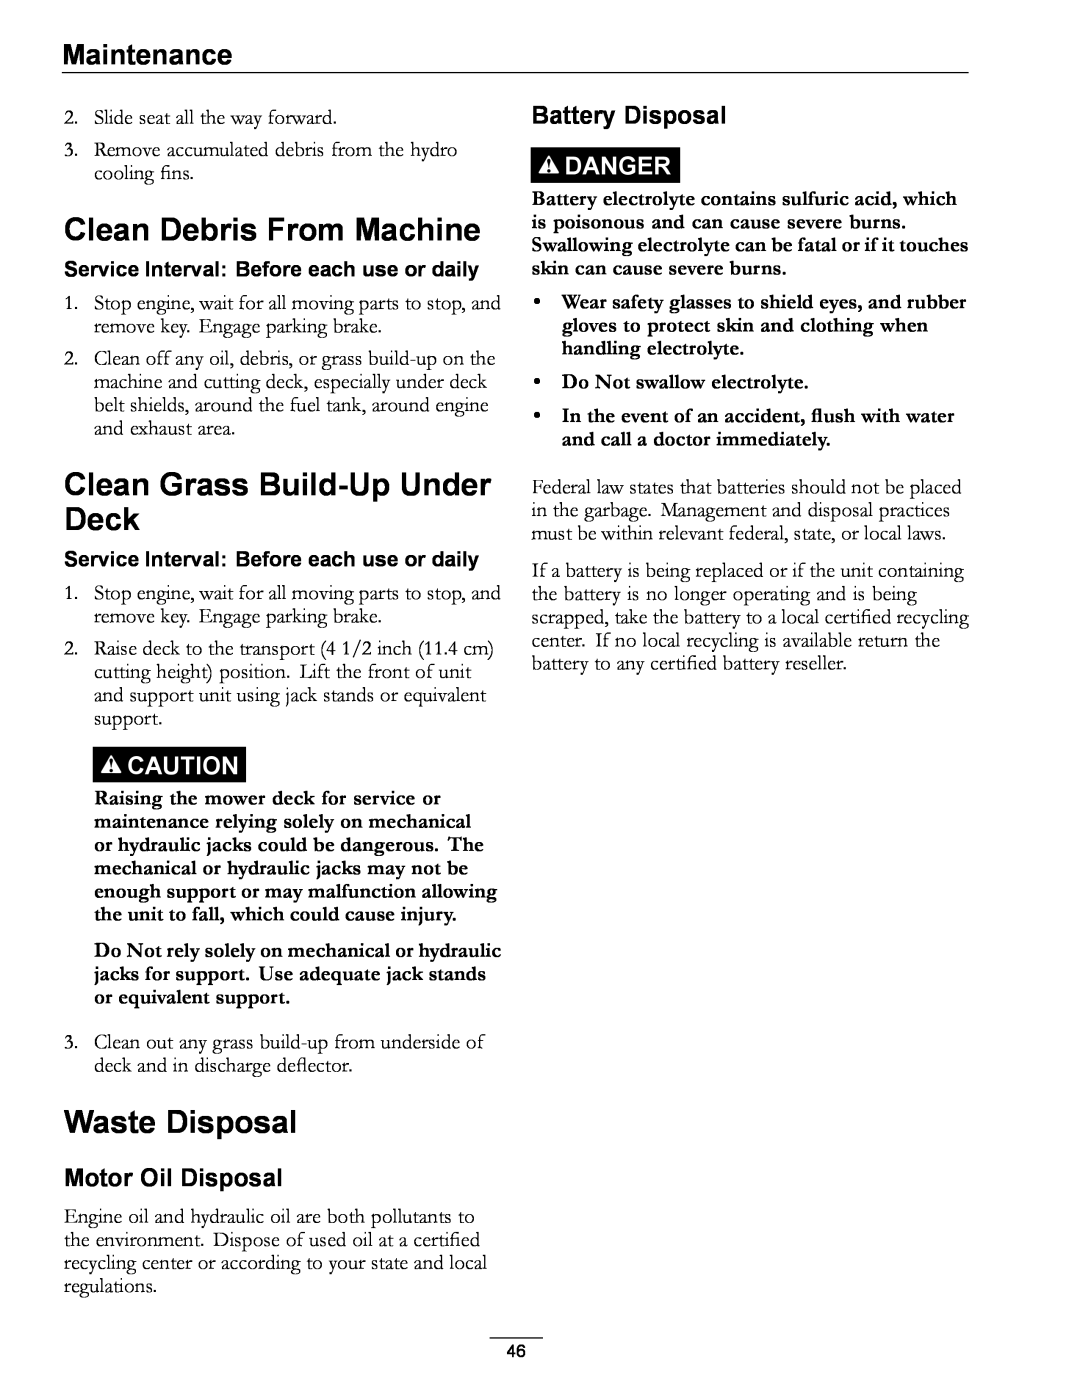 Exmark 312 Clean Debris From Machine, Clean Grass Build-UpUnder Deck, Waste Disposal, Motor Oil Disposal, Battery Disposal 